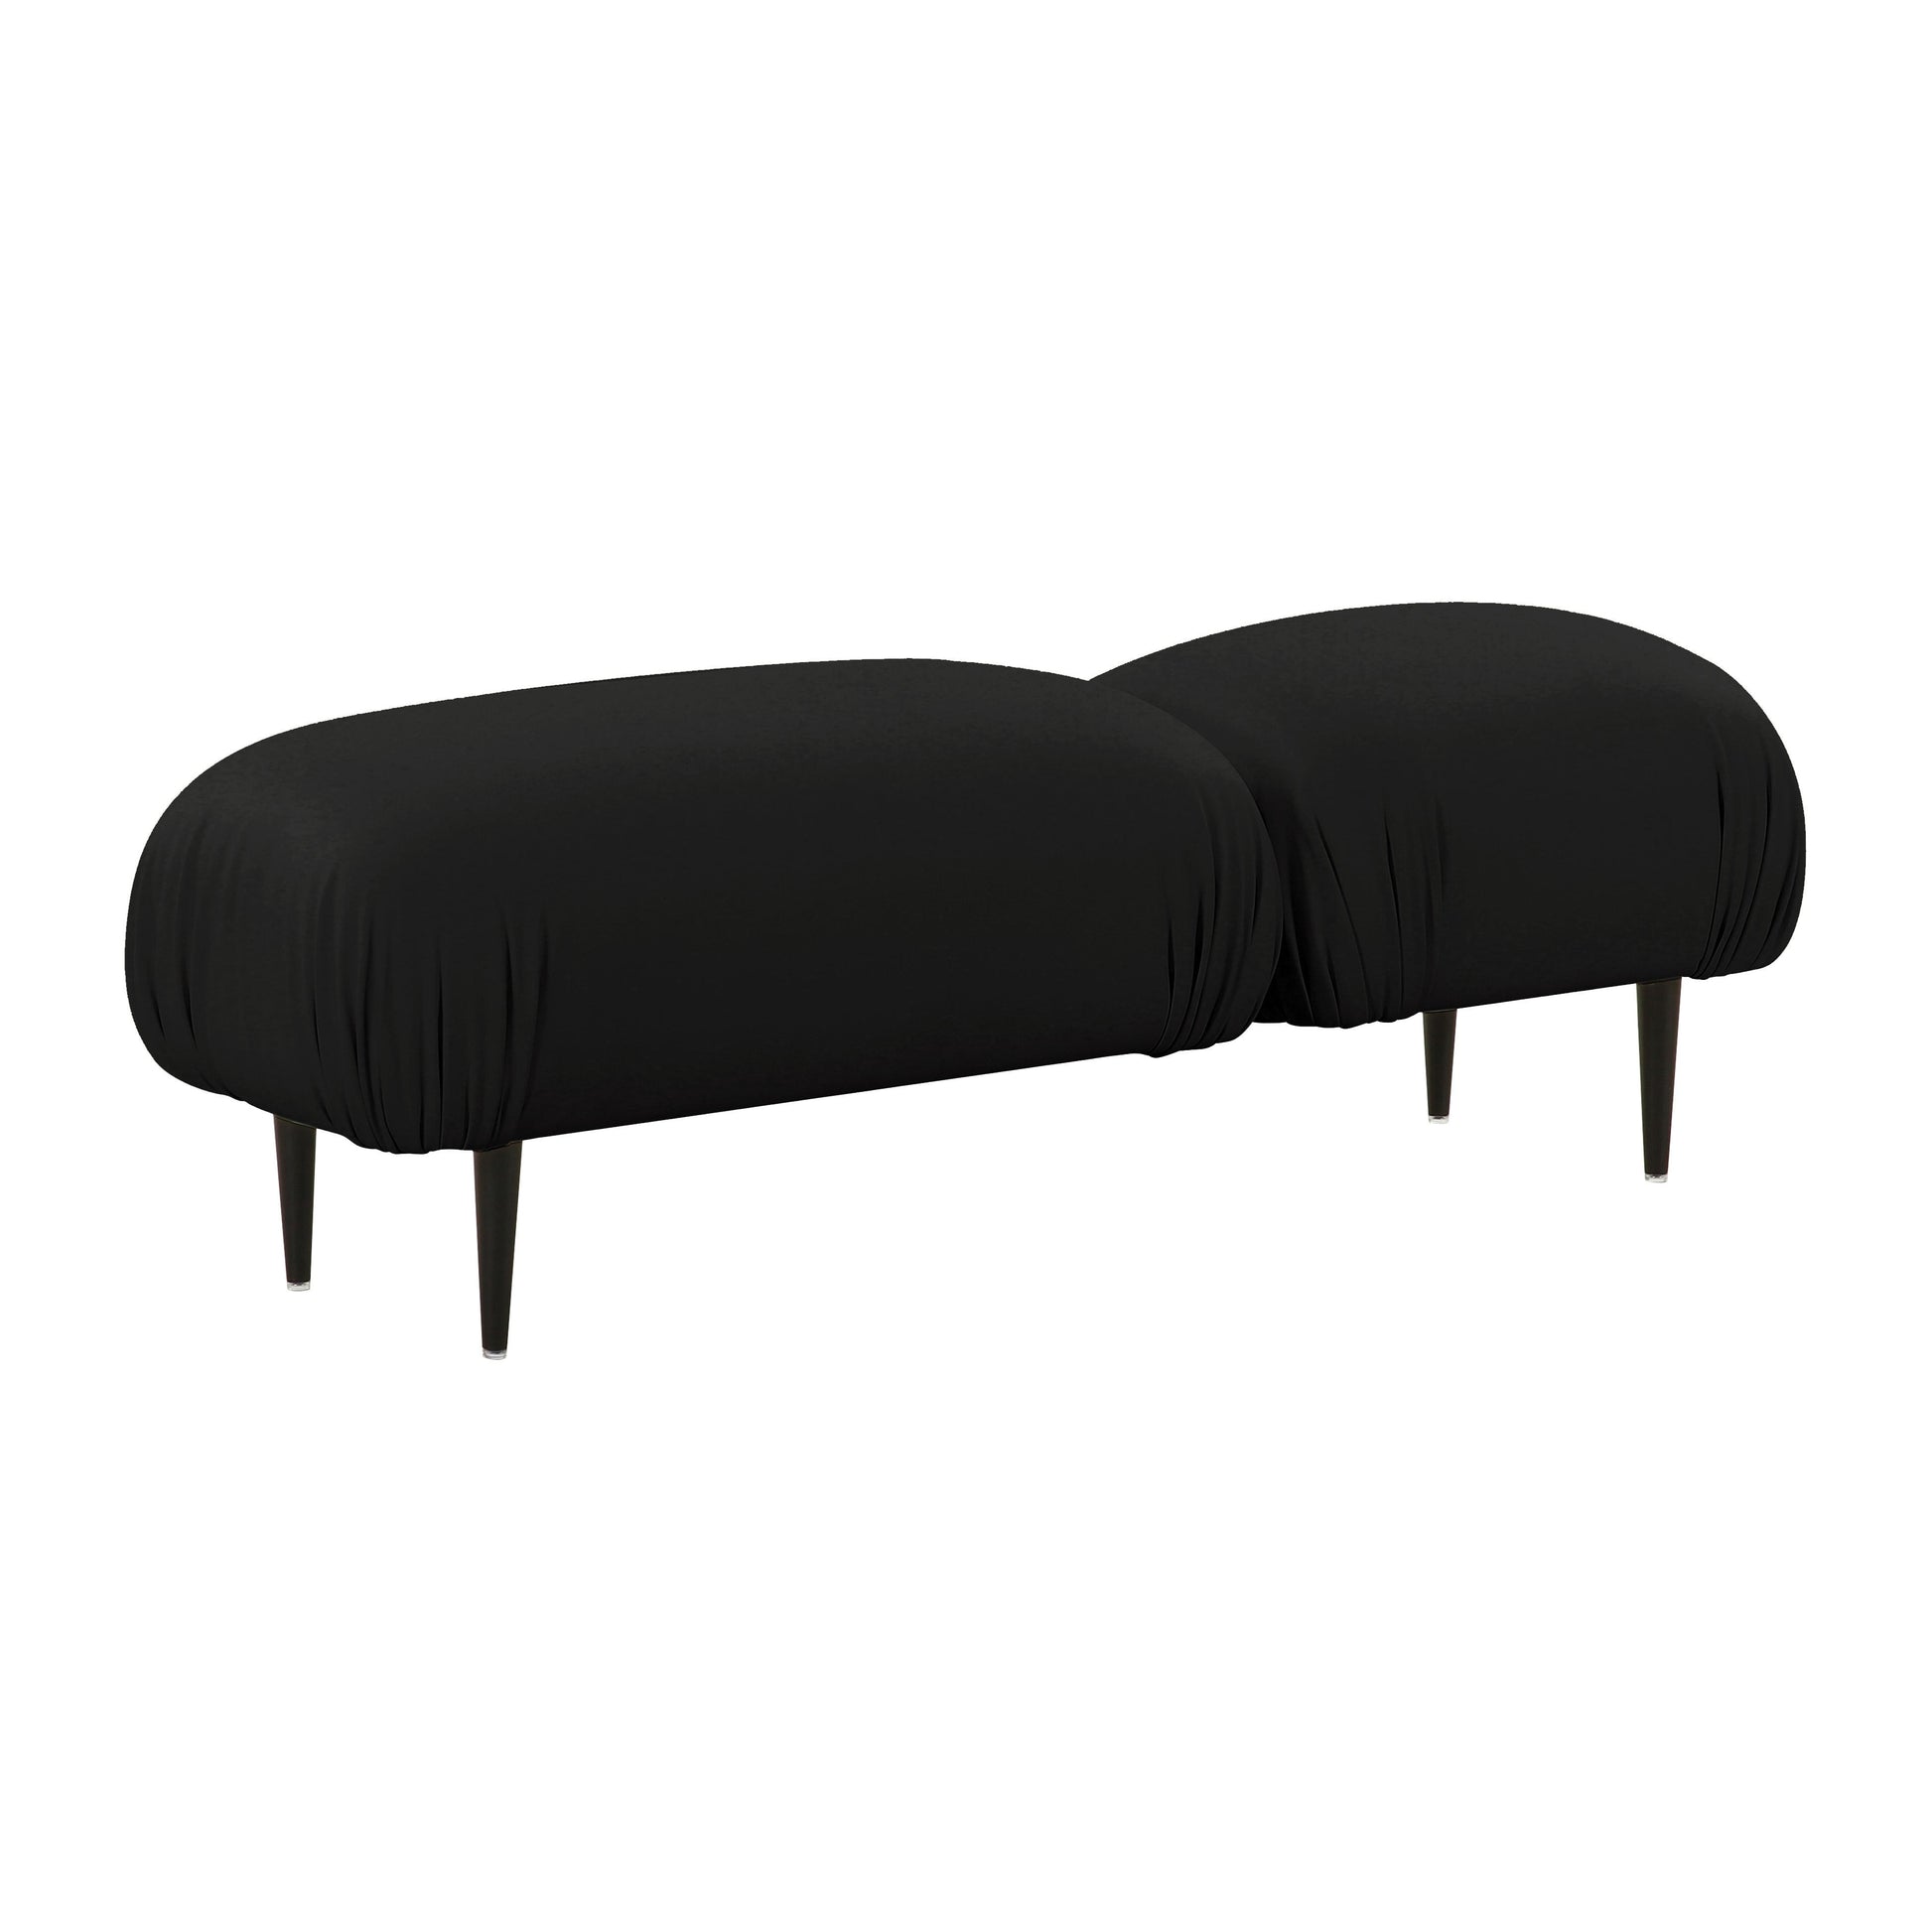 Tov Furniture Adalynn Black Vegan Leather Bench